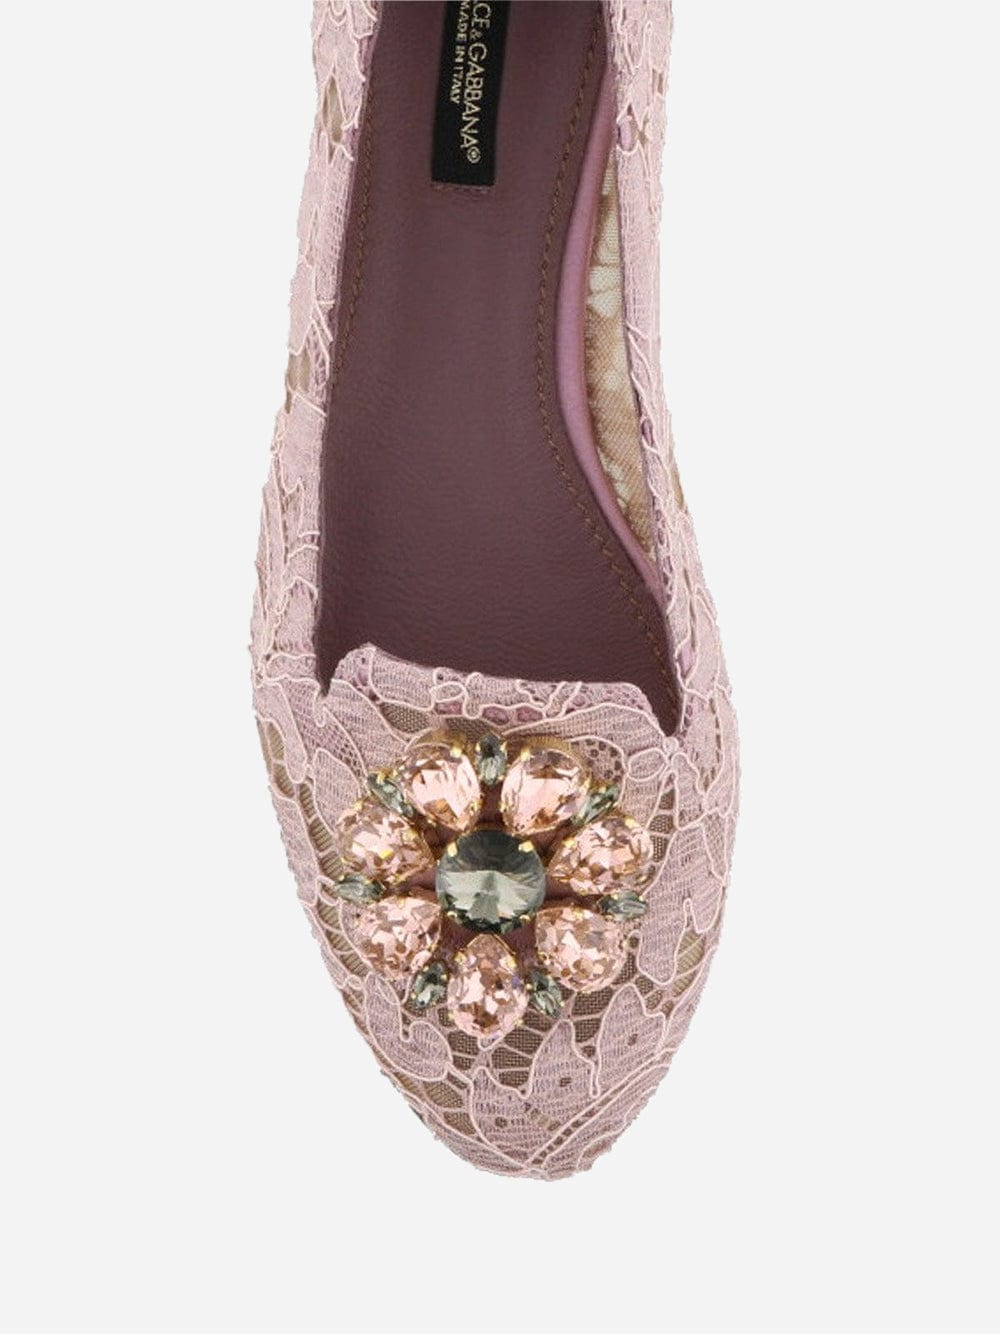 Dolce & Gabbana Vally Taormina Lace Ballerina Flats